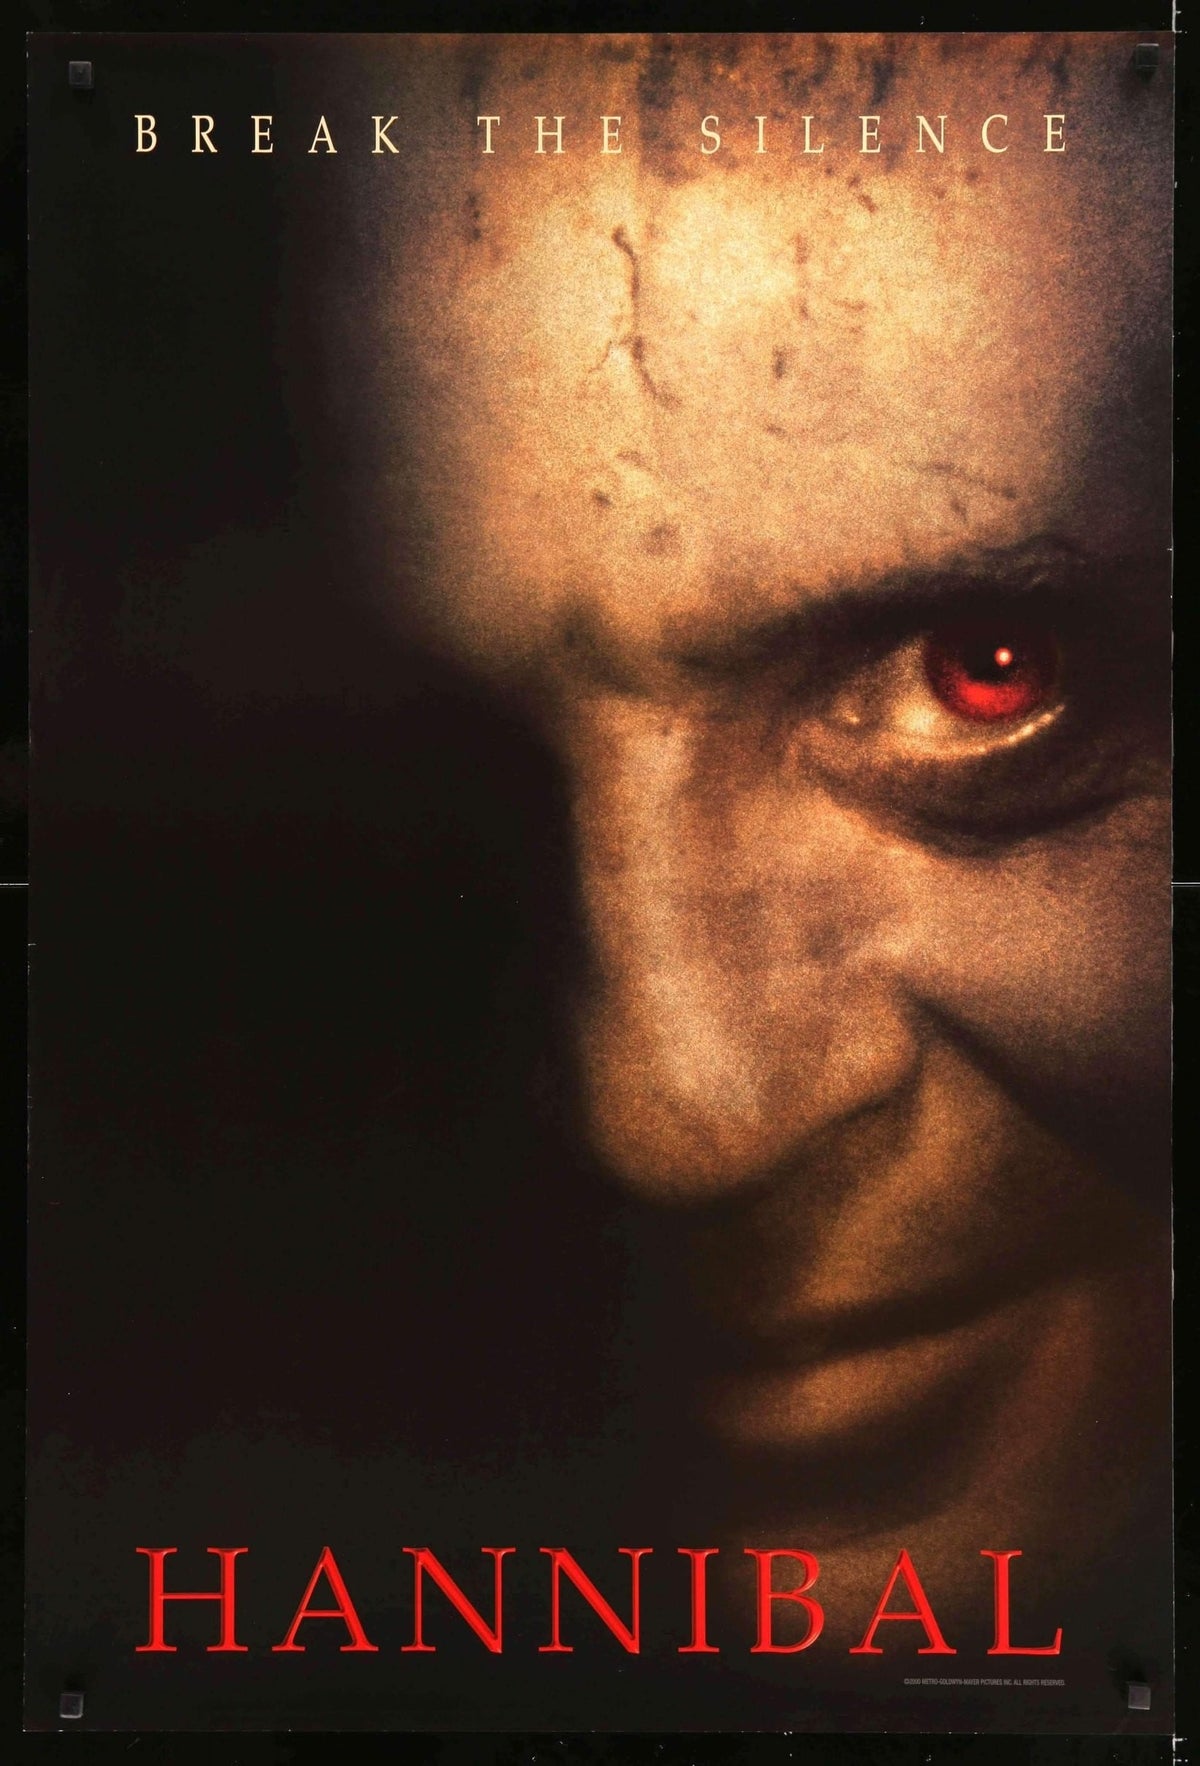 Hannibal (2001) original movie poster for sale at Original Film Art